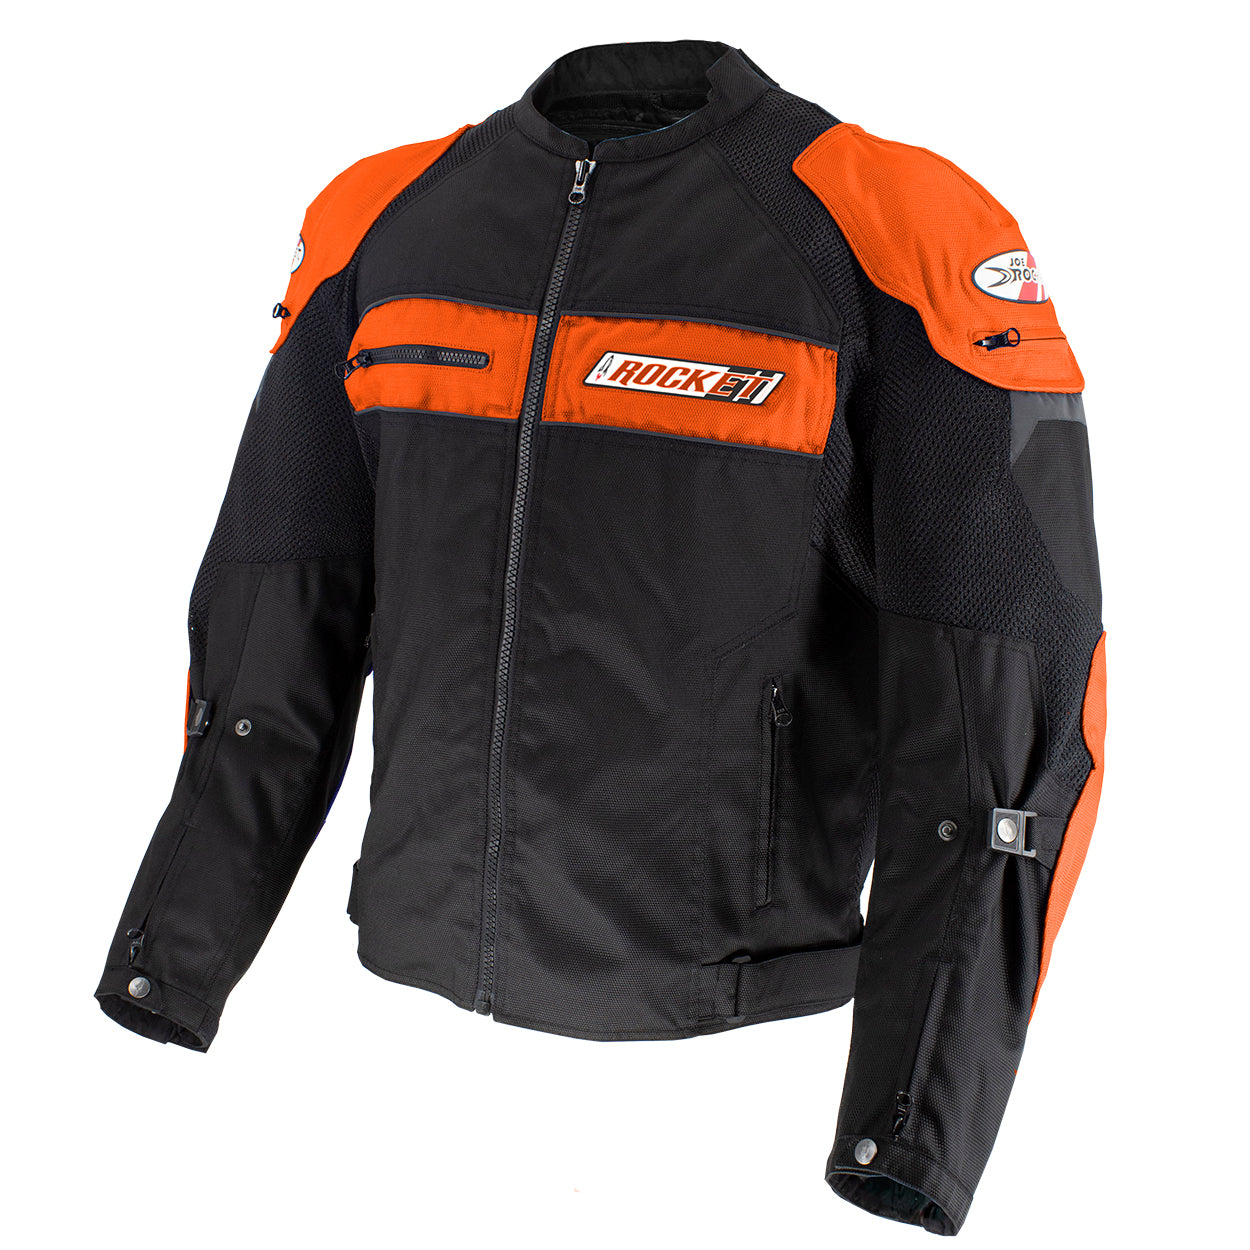 Joe Rocket Dayride Textile Jacket - Orange/Black